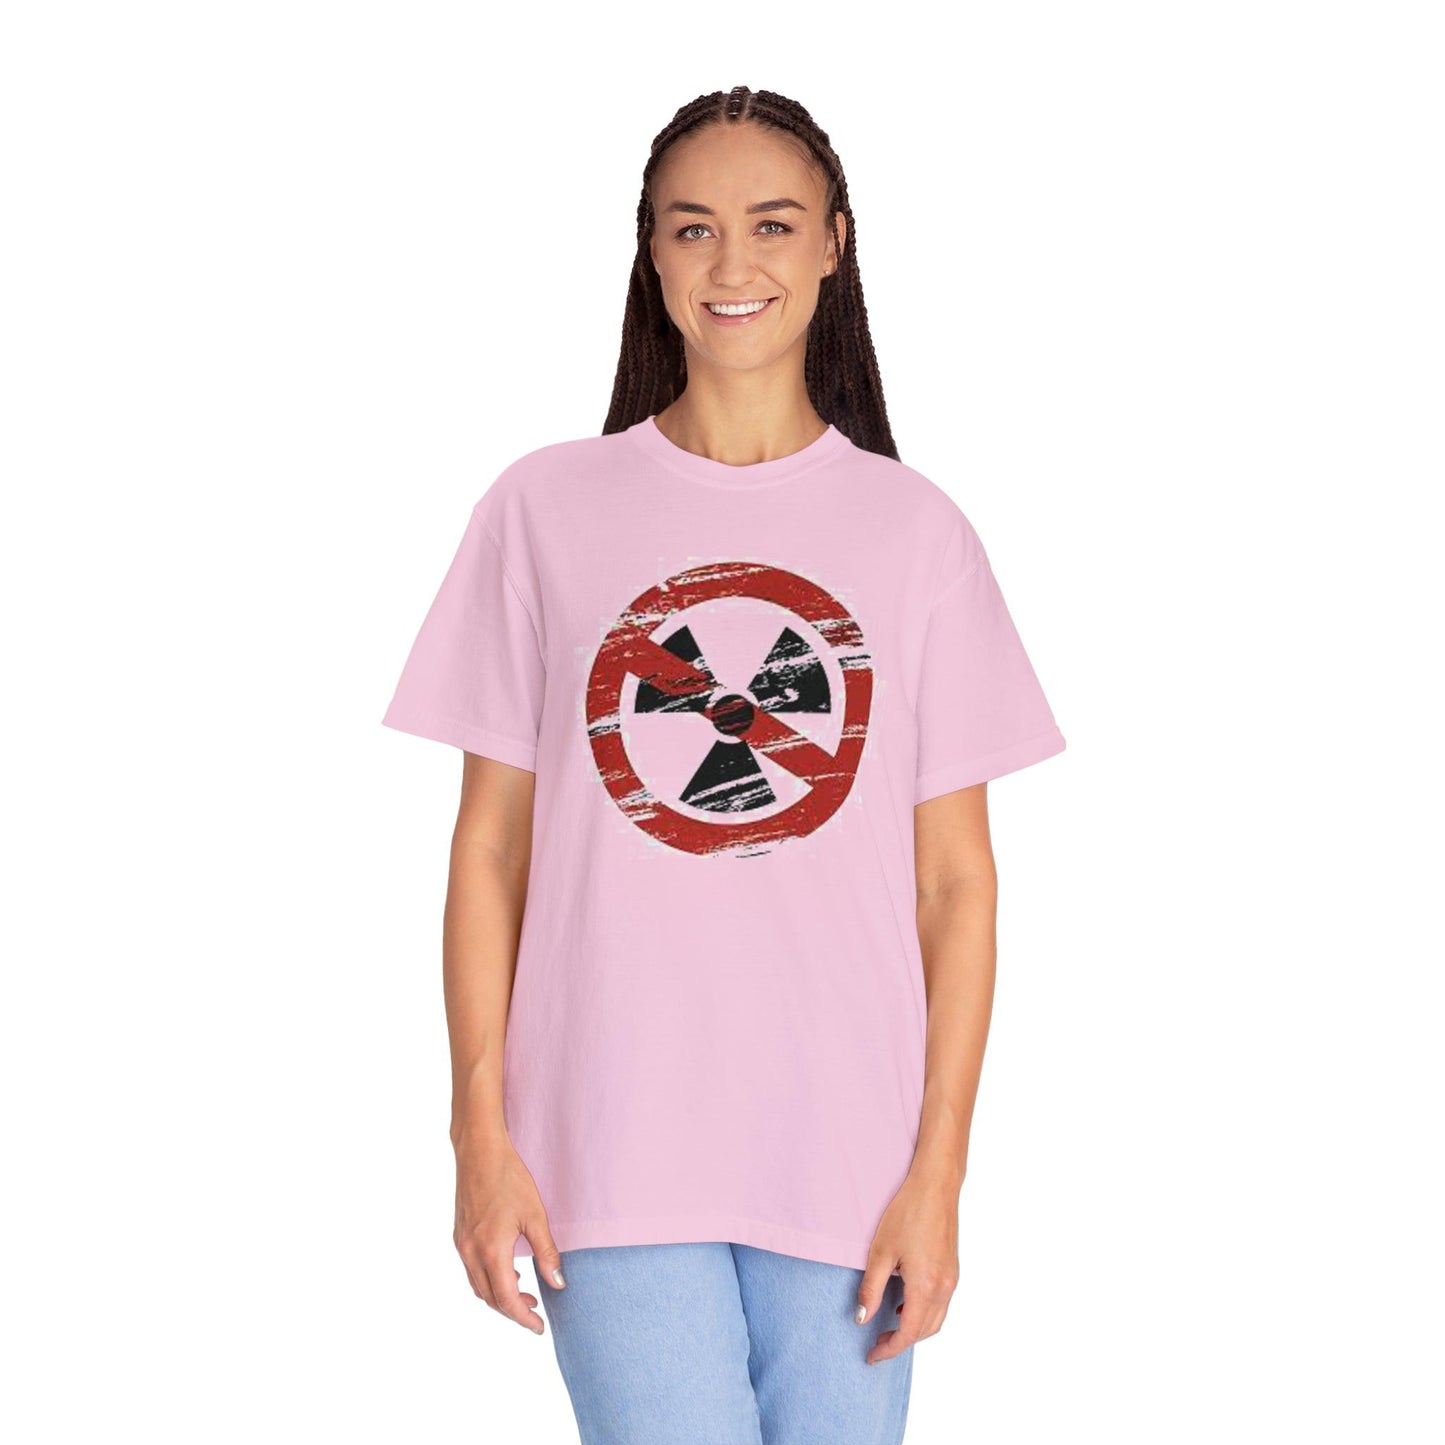 "WE NEED NON NUCLEAR WORLD" T-Shirt - Pandaize